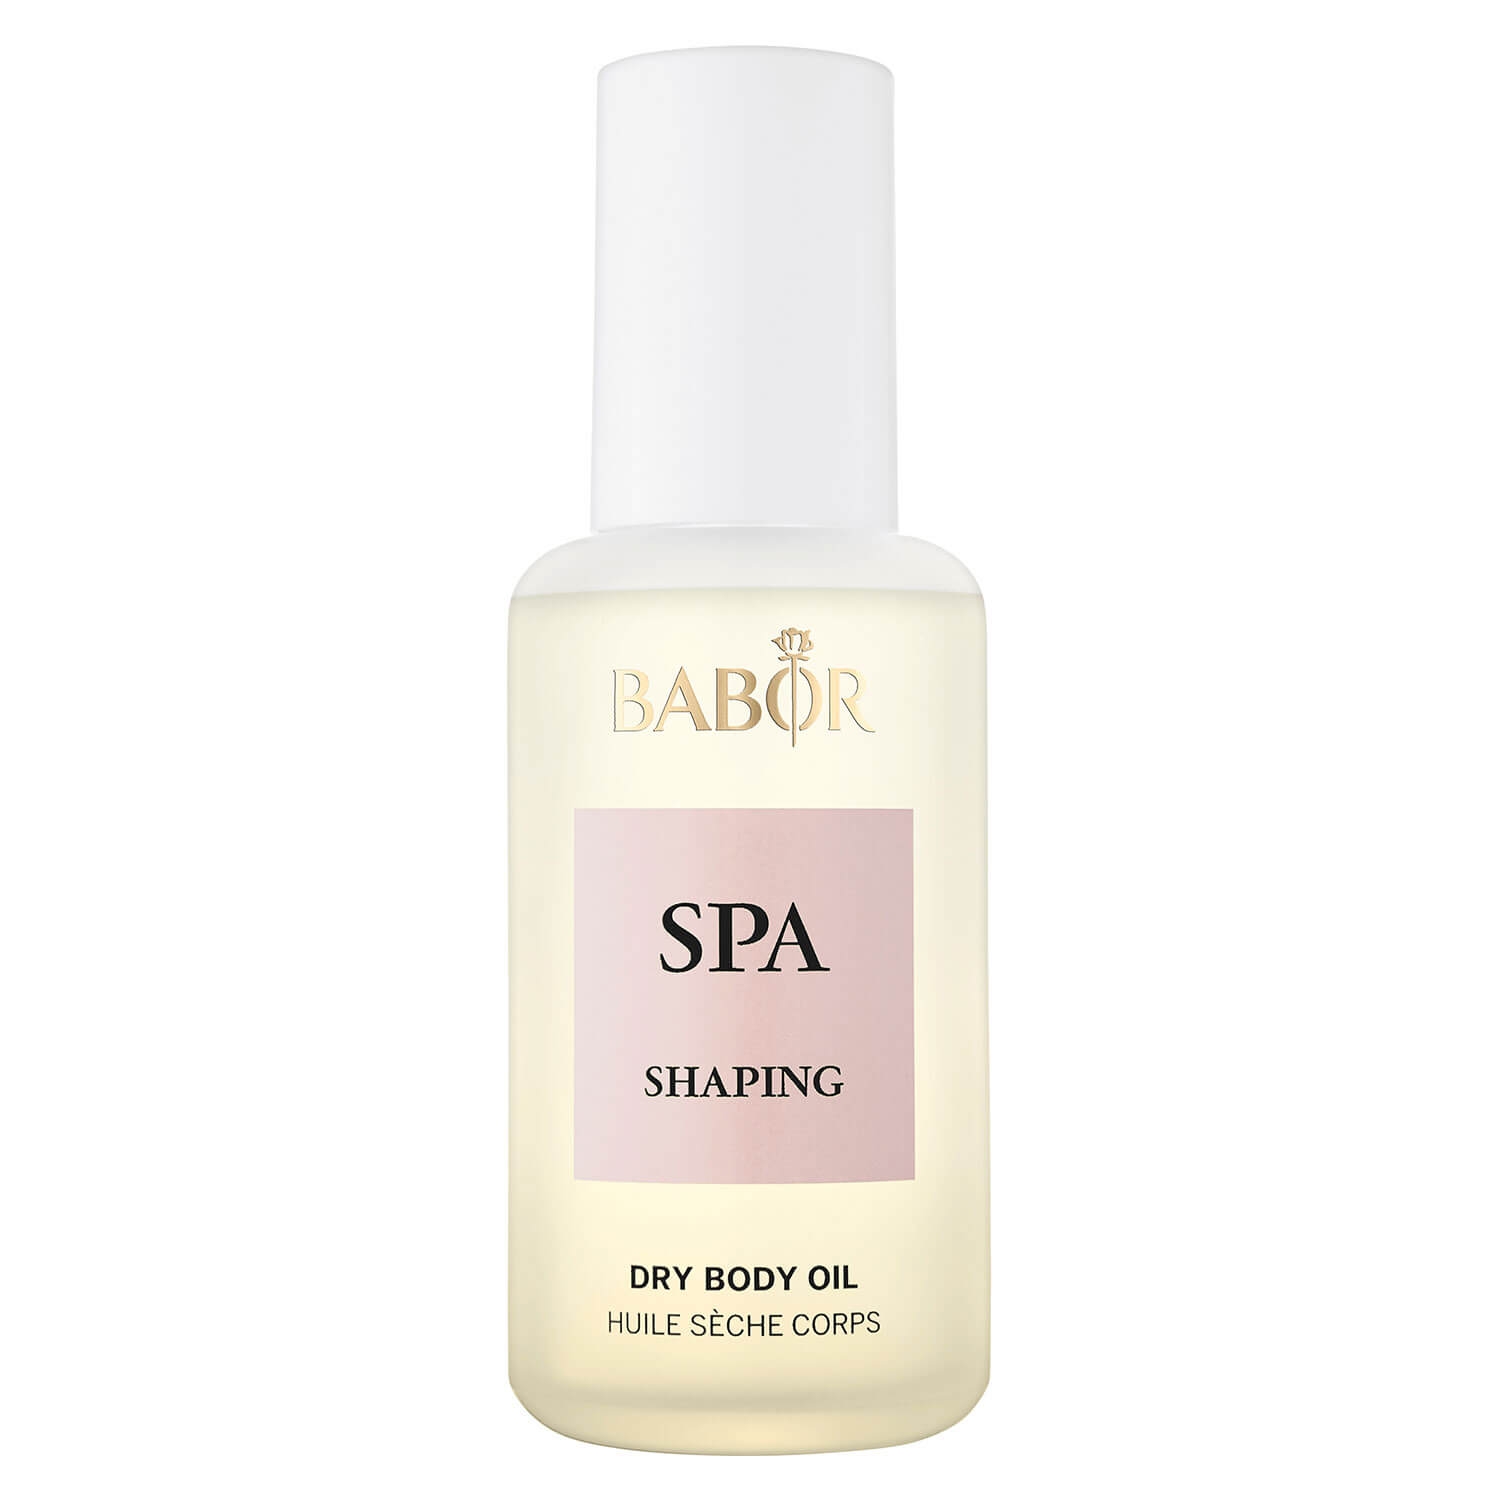 Produktbild von BABOR SPA - Shaping Dry Body Oil